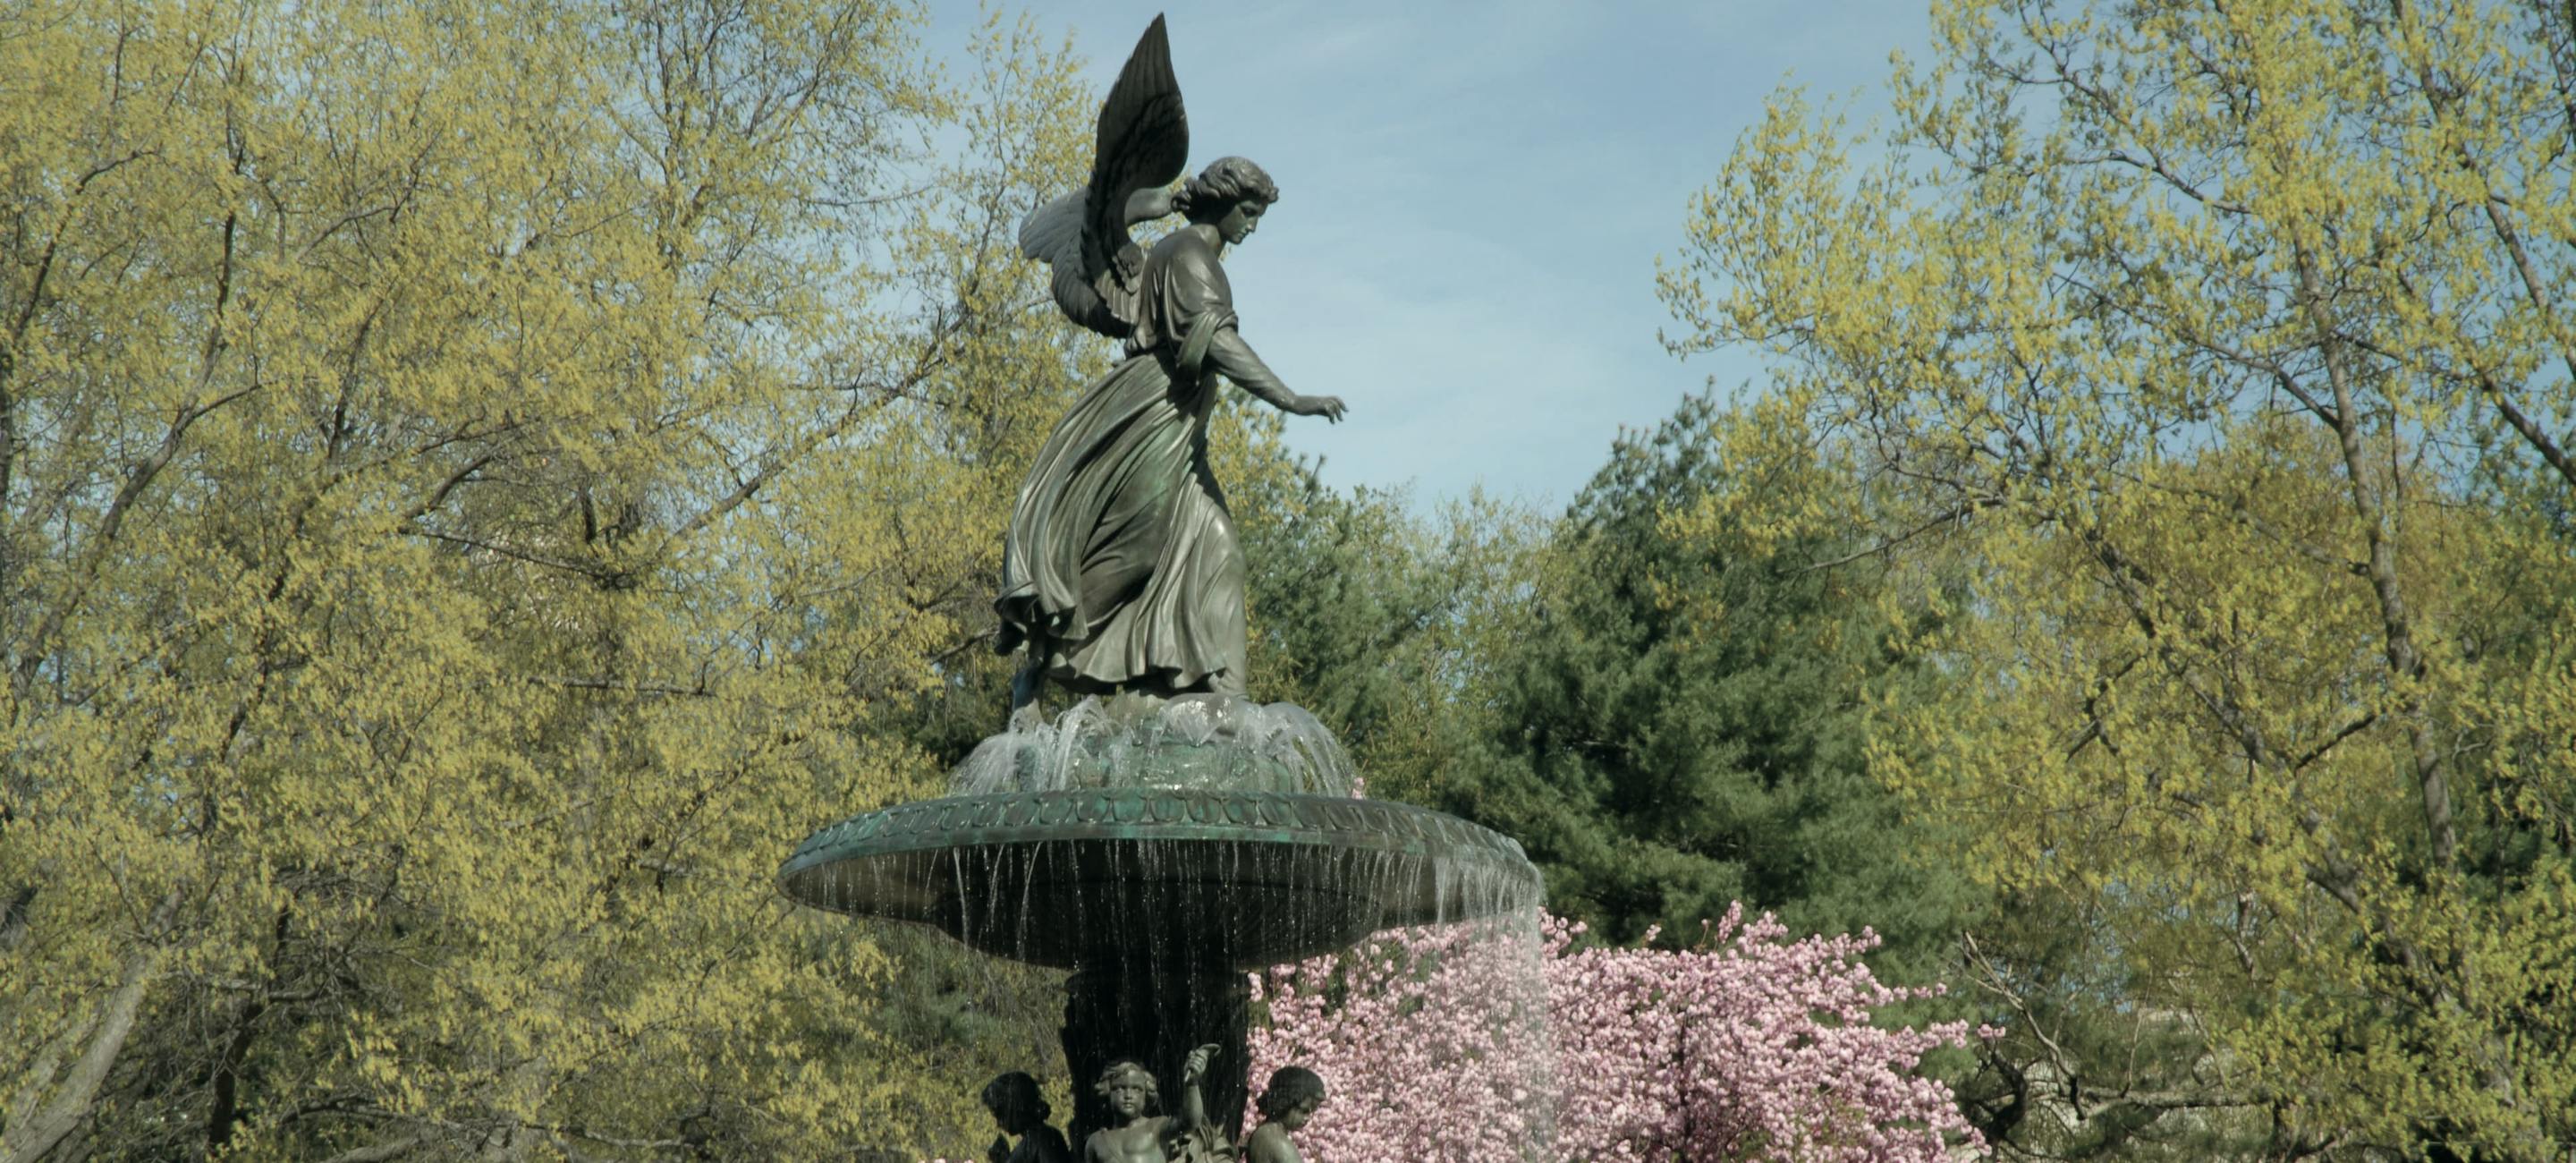 Central Park's Bethesda Foundation in spring